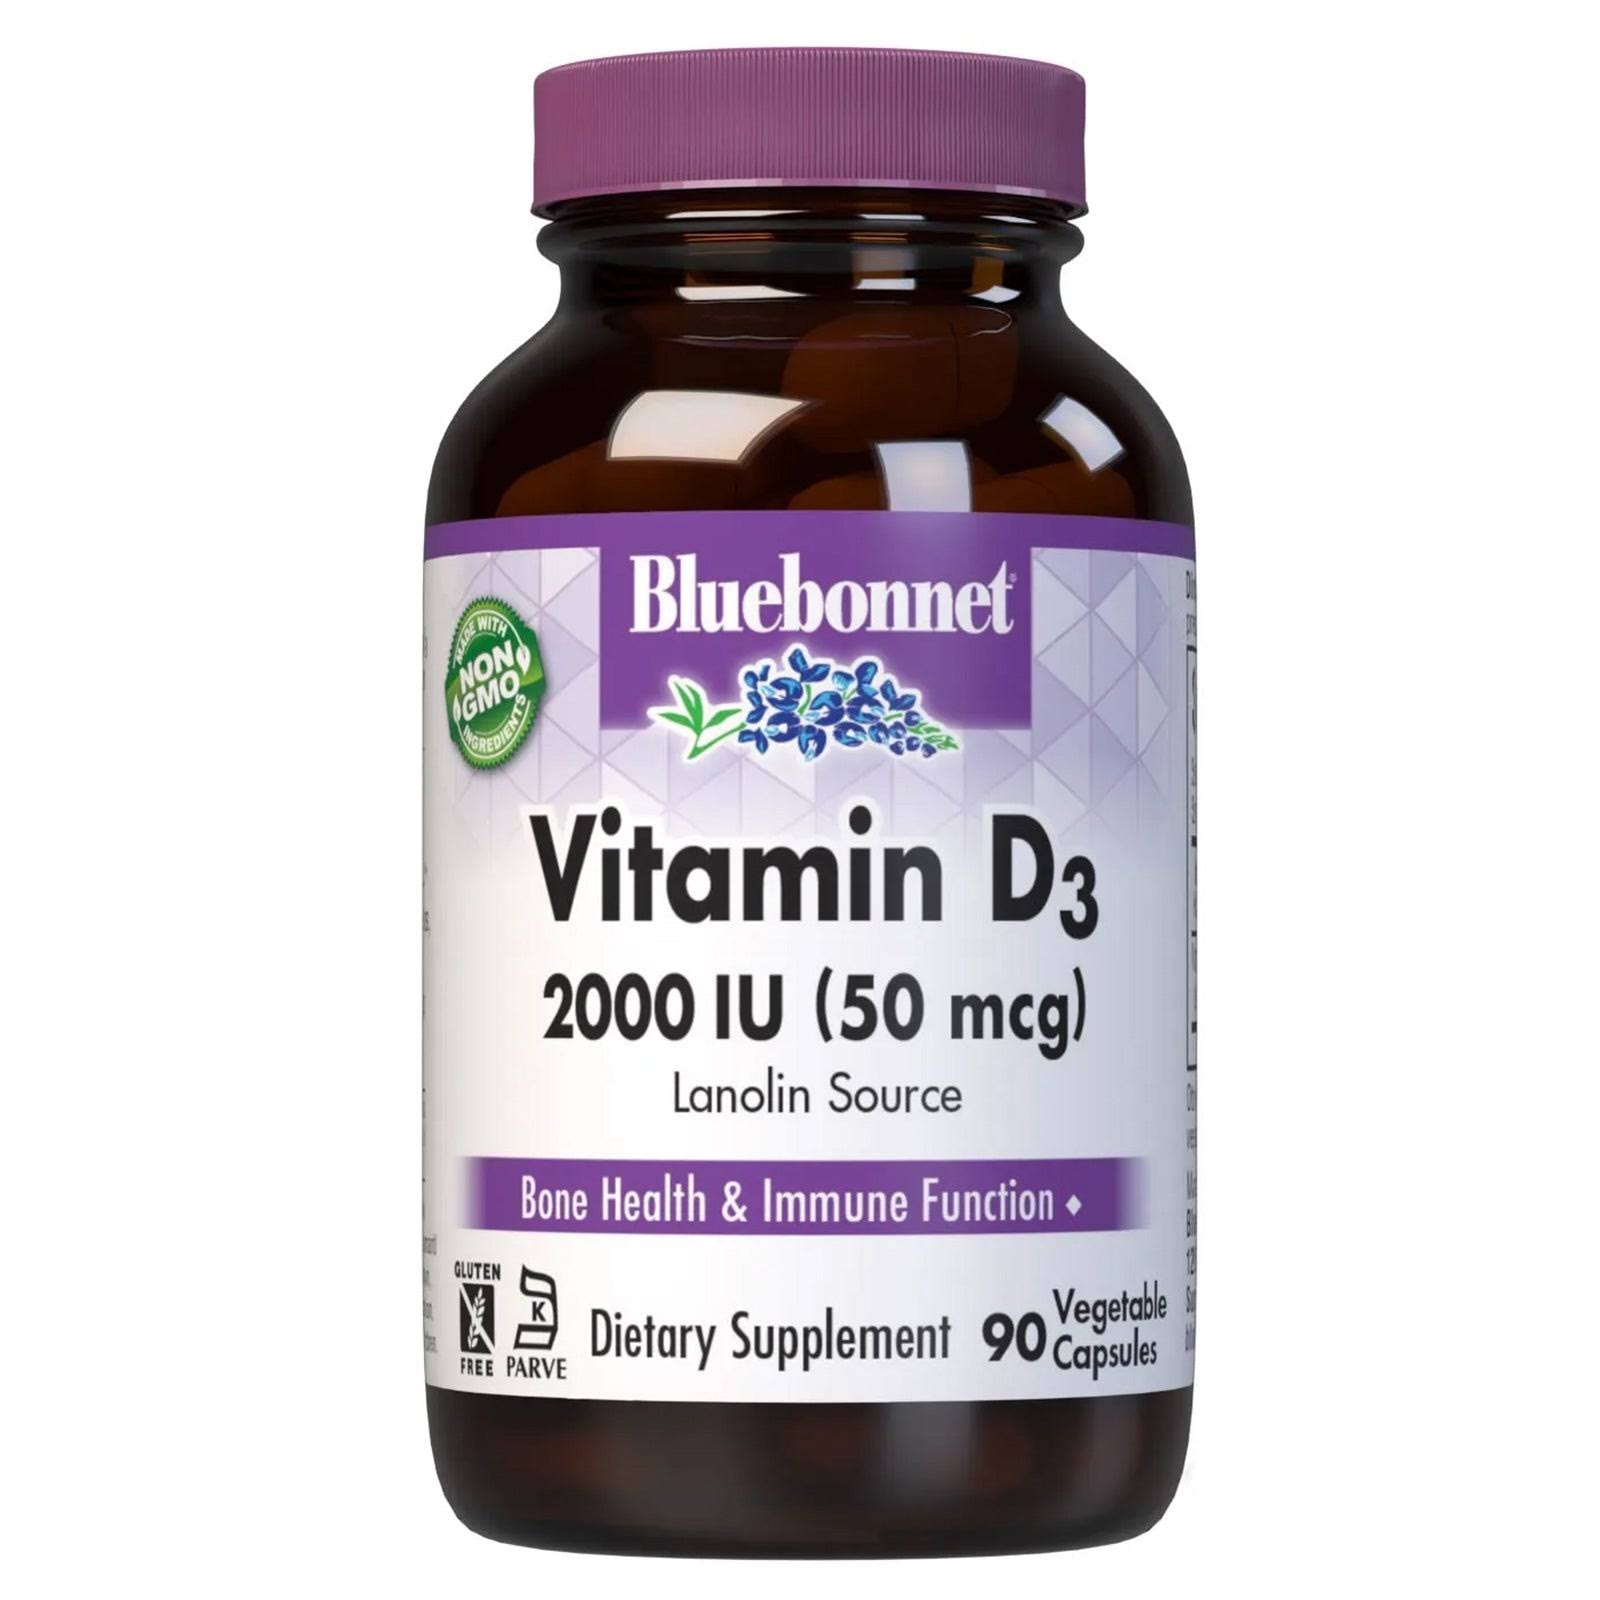 Bluebonnet Nutrition Vitamin D3 2000 IU 90 Vegetarian Capsules